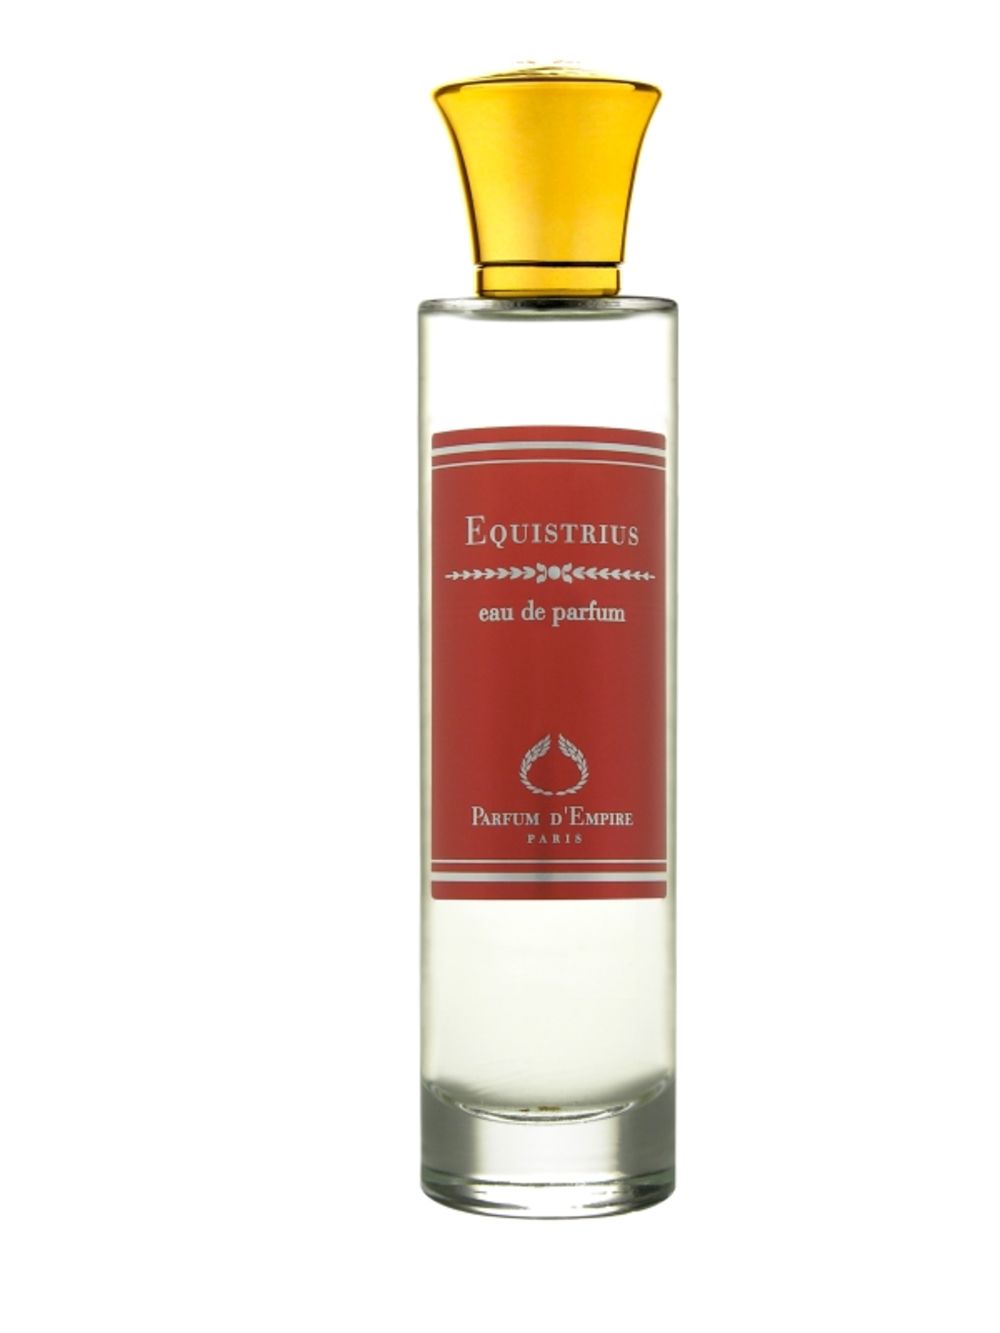 Parfum d'Empire Equistrius 100 ml 8280 din a 50 ml 5940 din